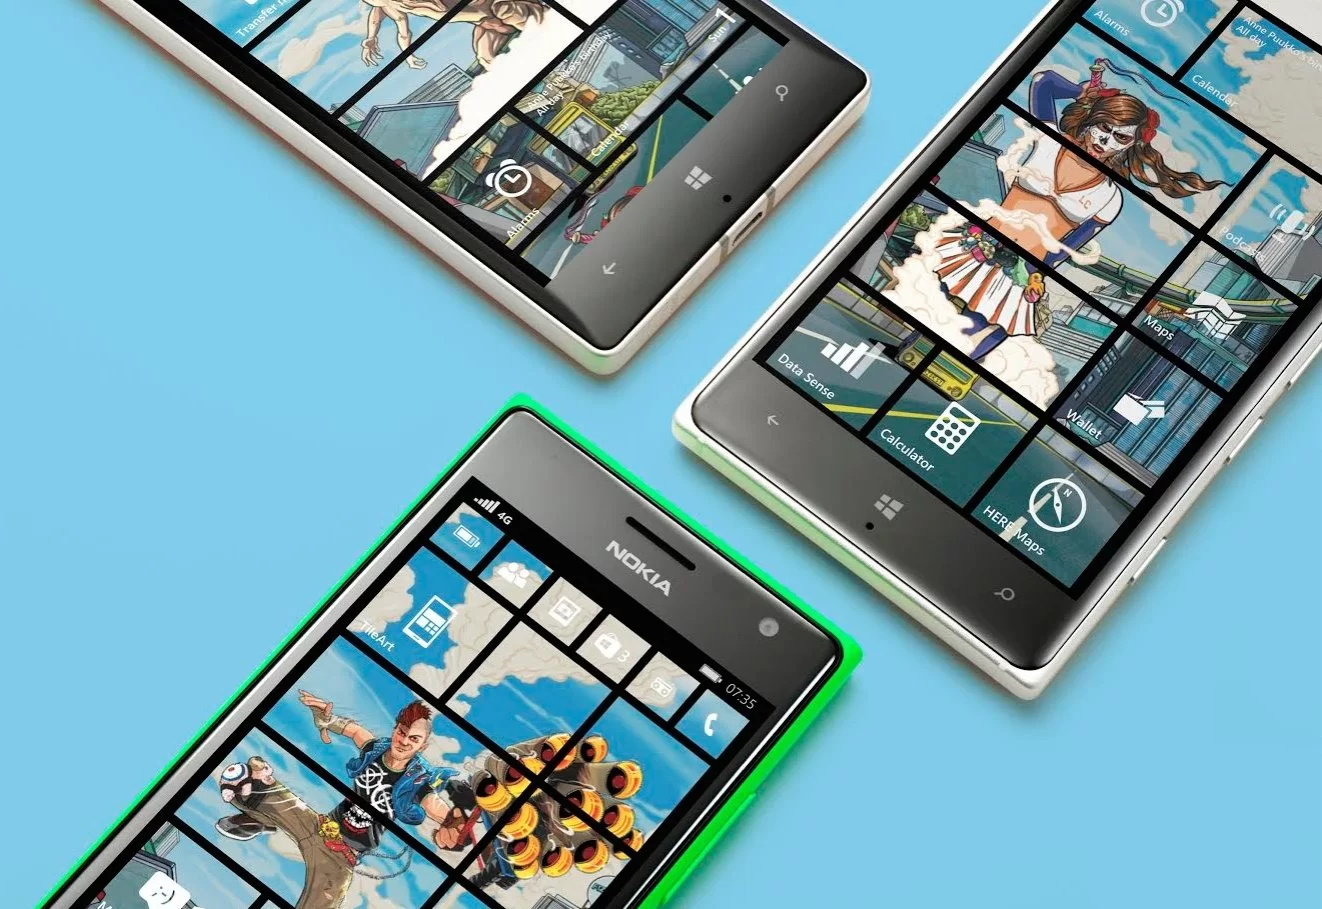 TileArt for windows phone Lead | #TileArt | Microsoft ปล่อยแอพ #TileArt แอพแต่งหน้า LiveTiles สวยๆ สำหรับ Windows phone พร้อมร่วมประกวดหน้าจอชิง Surface Pro 3 และ Lumia 930 10 รางวัล